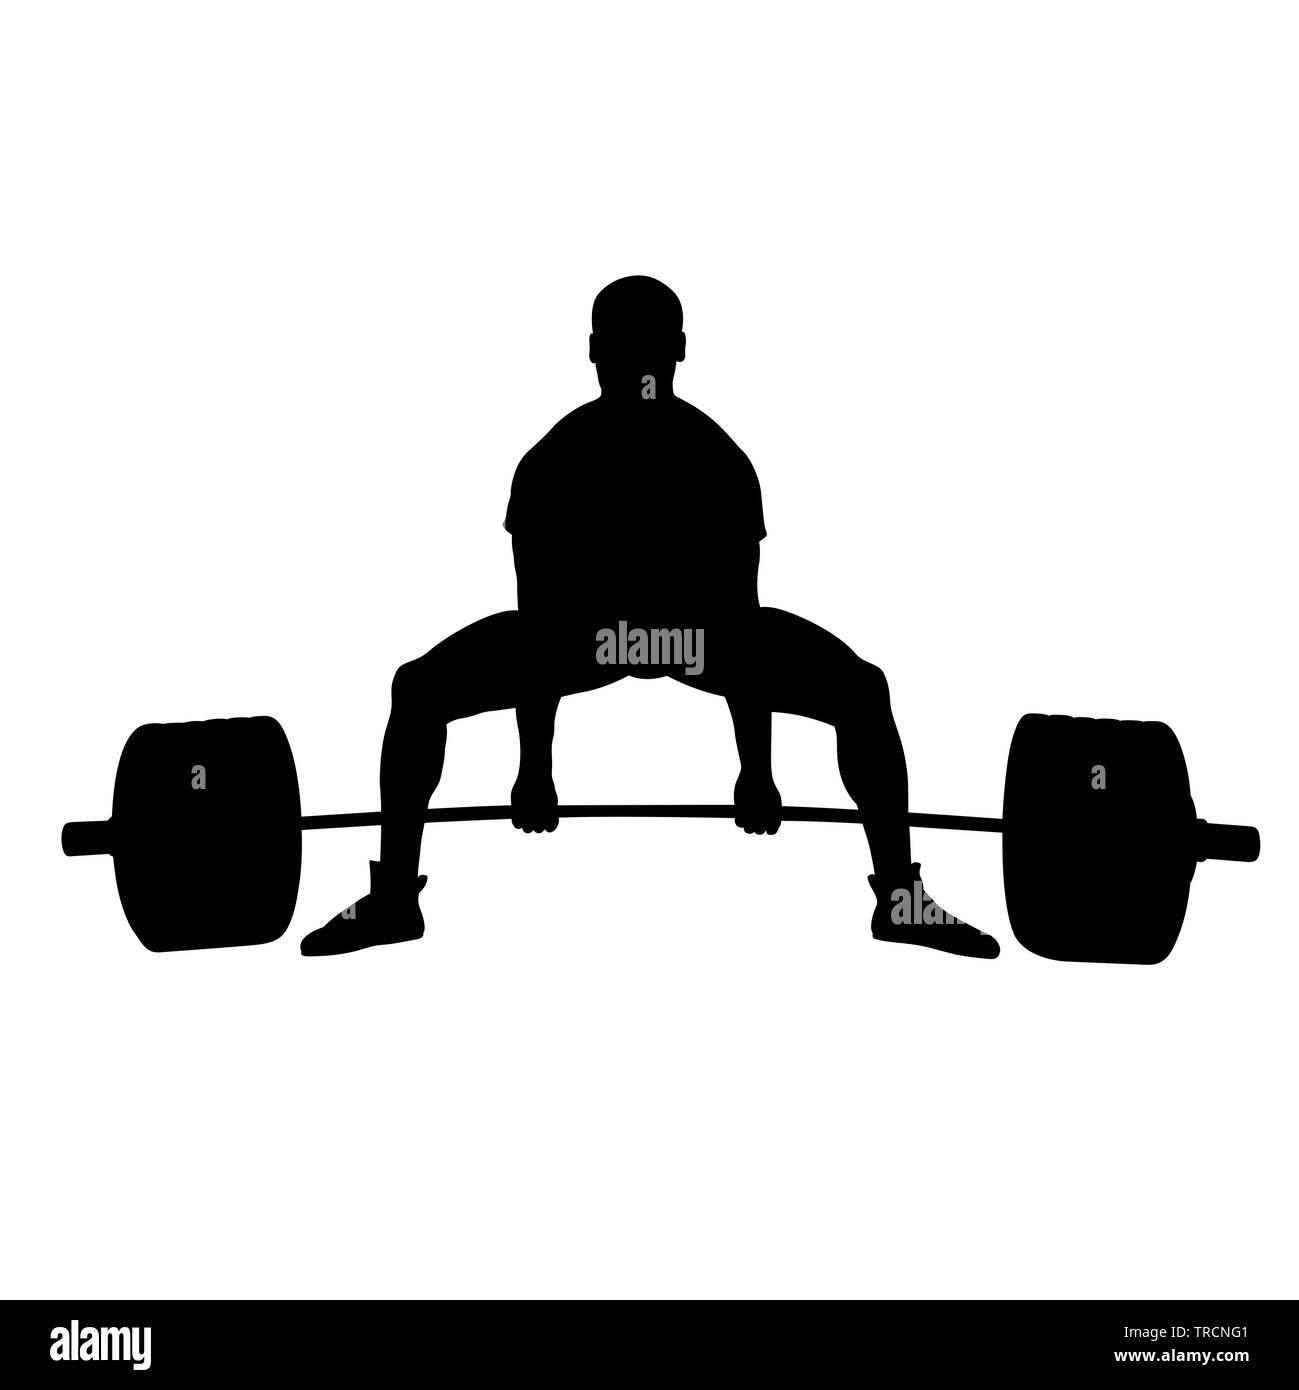 powerlifting athlete exercise deadlift black silhouette on white background Stock Photo